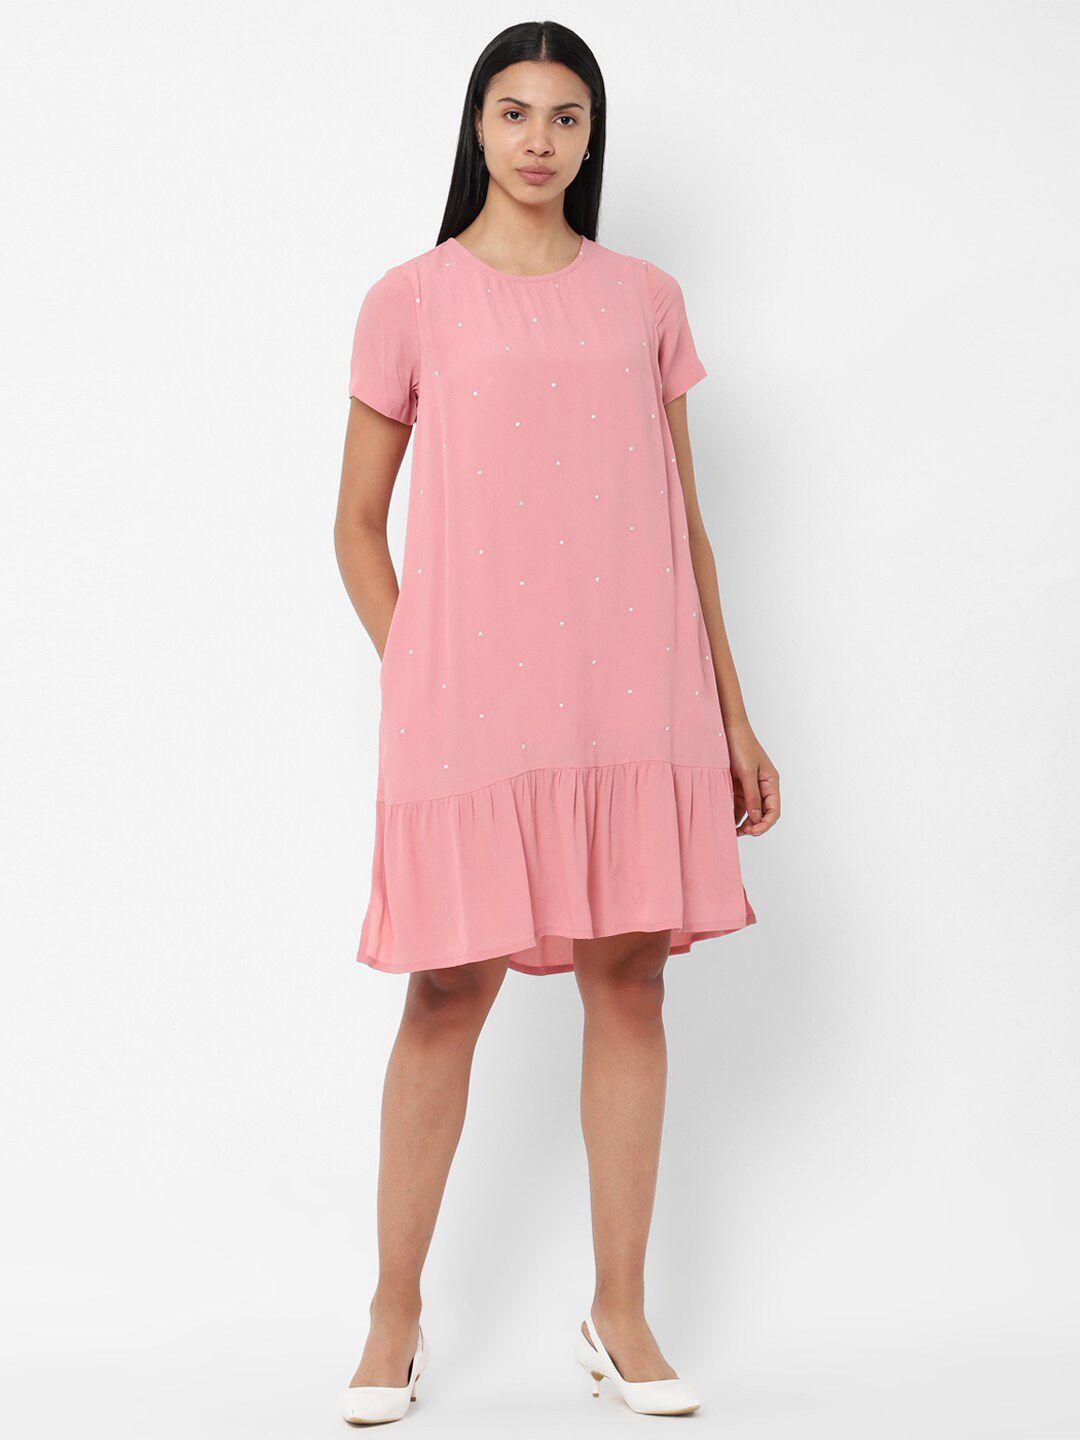 allen solly woman pink polka dots embroidered drop-waist dress